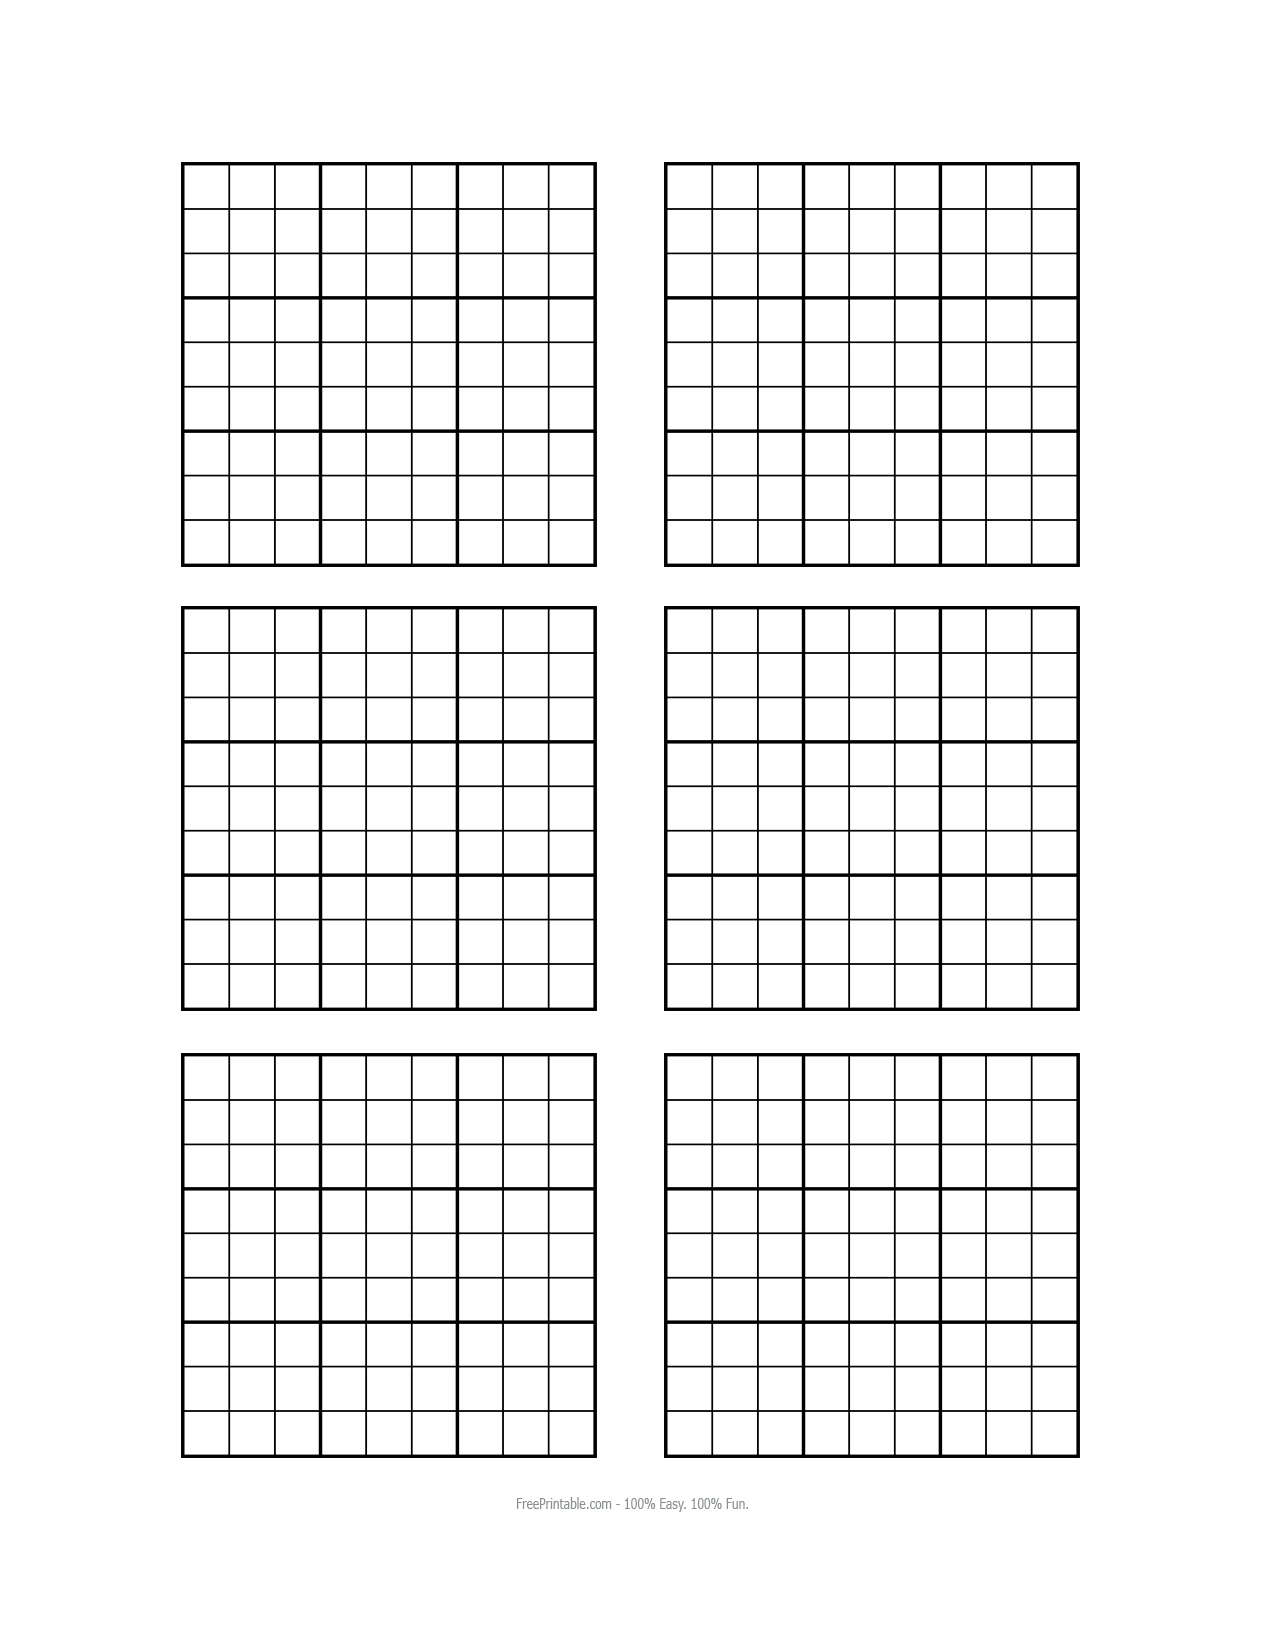 Free Printable Blank Sudoku Grids